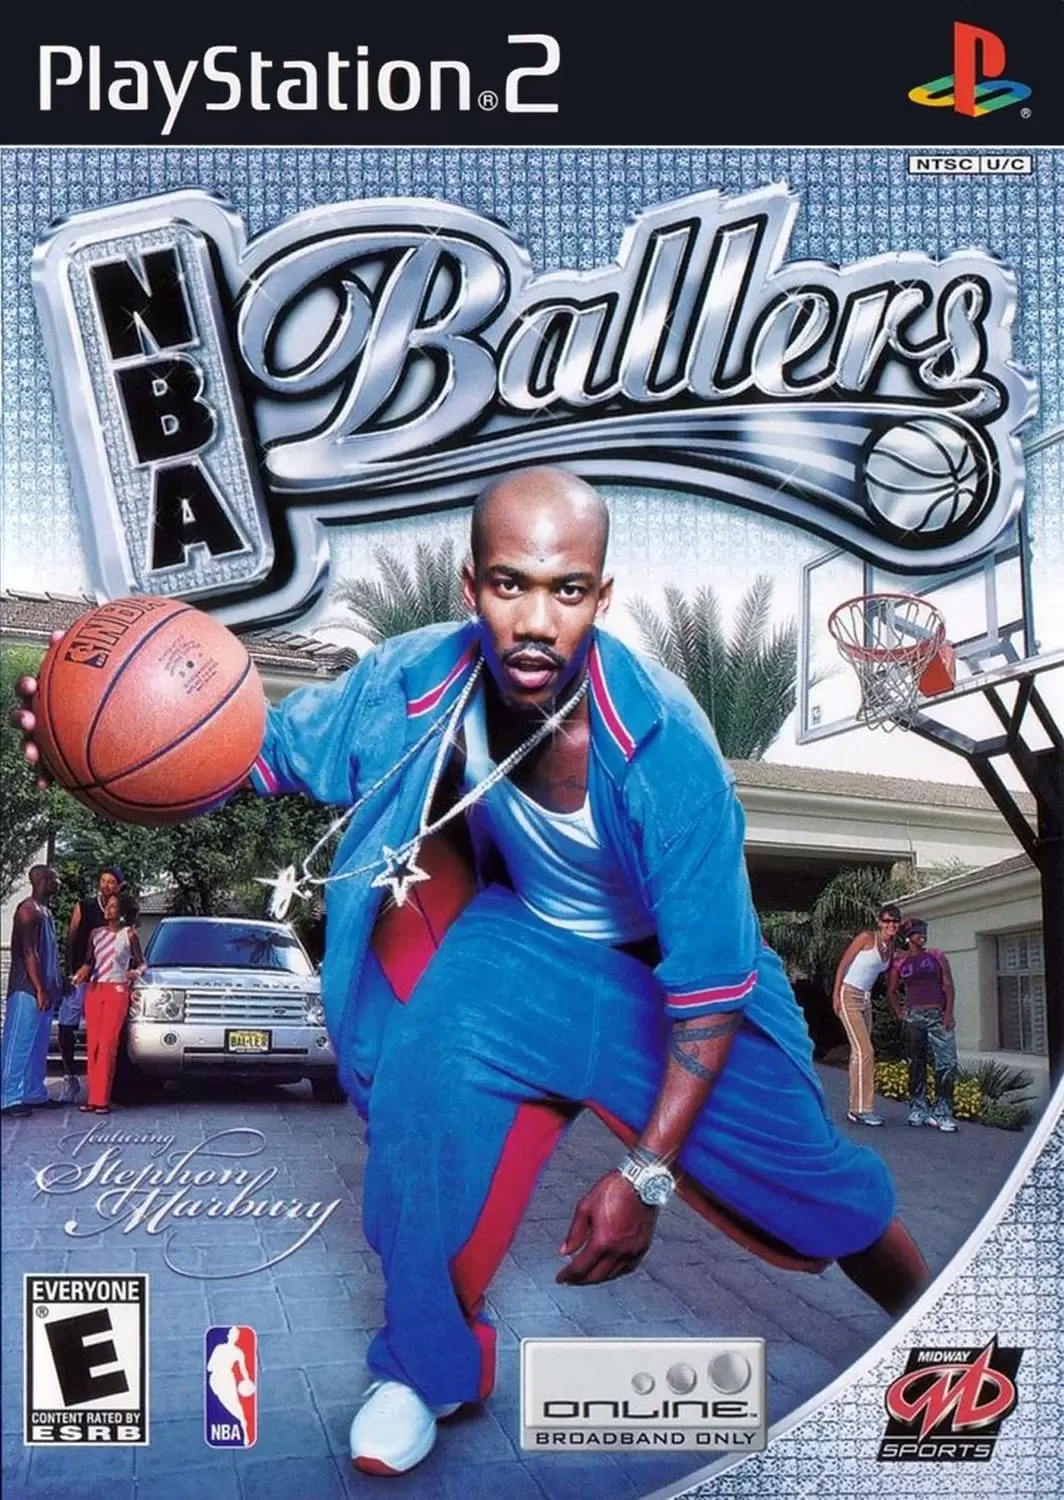 PS2 Games - NBA Ballers